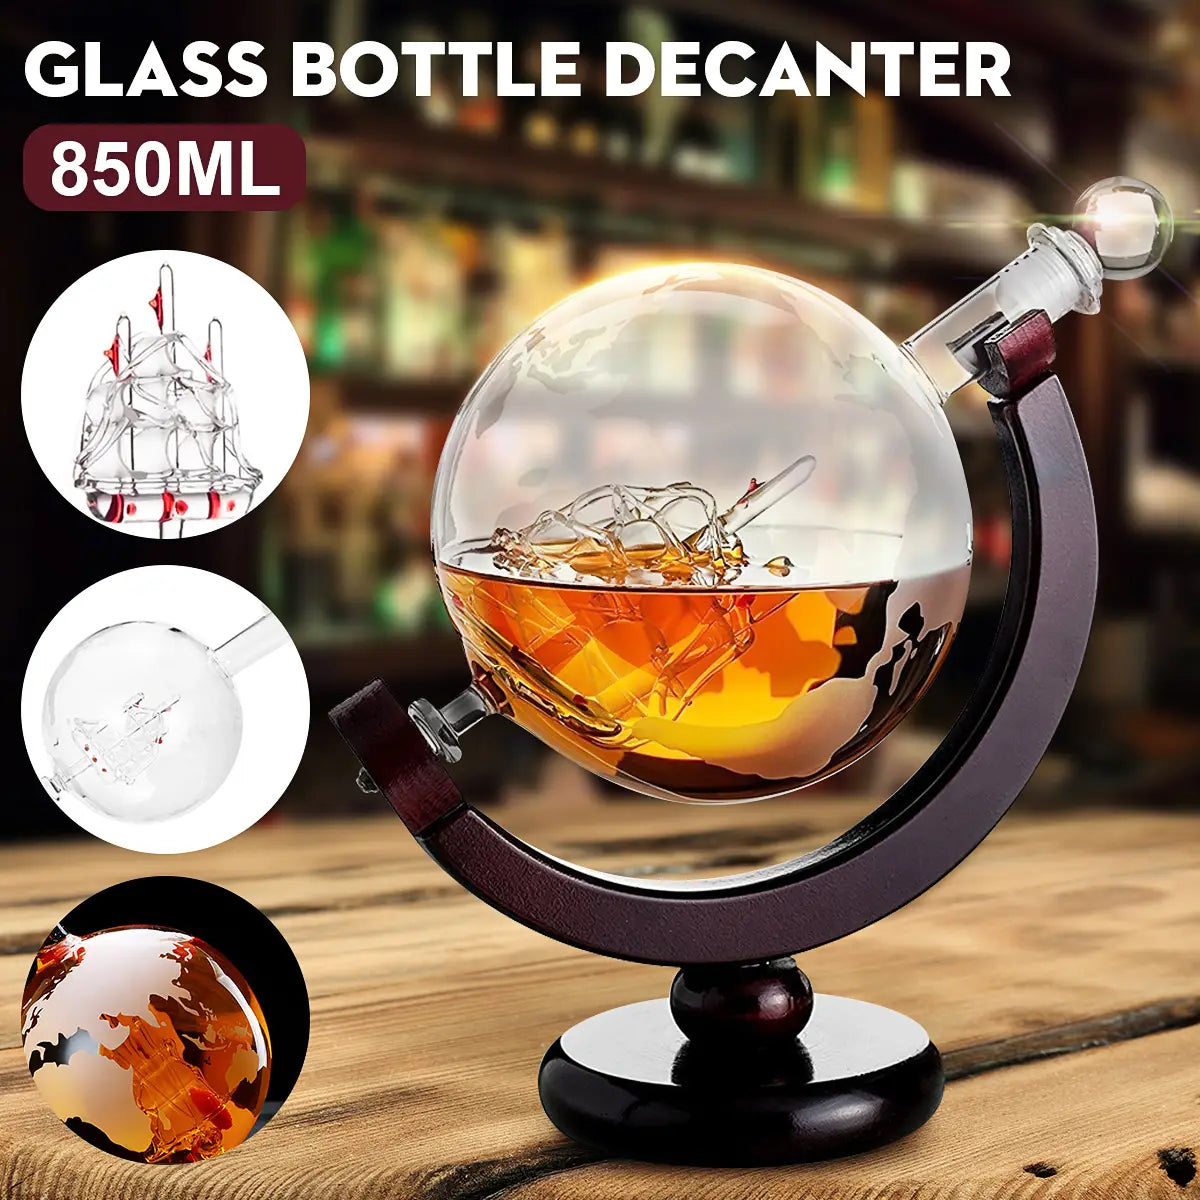 Glass Decanter - 850ml Whiskey Bottle, Large Capacity